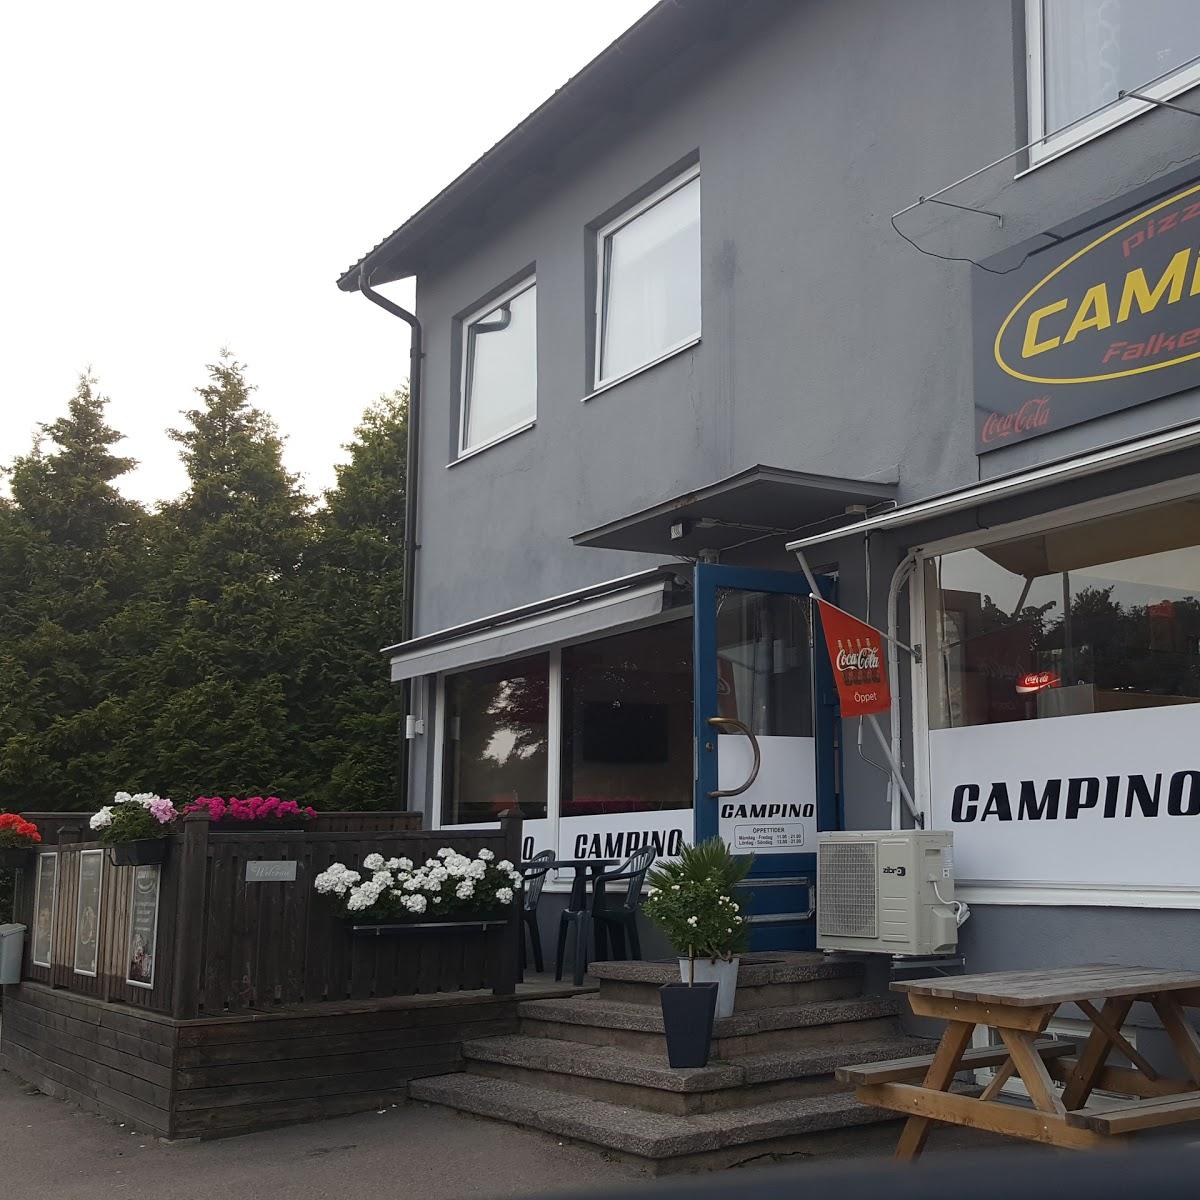 Restaurant "Pizzeria Campino," in Falkenberg